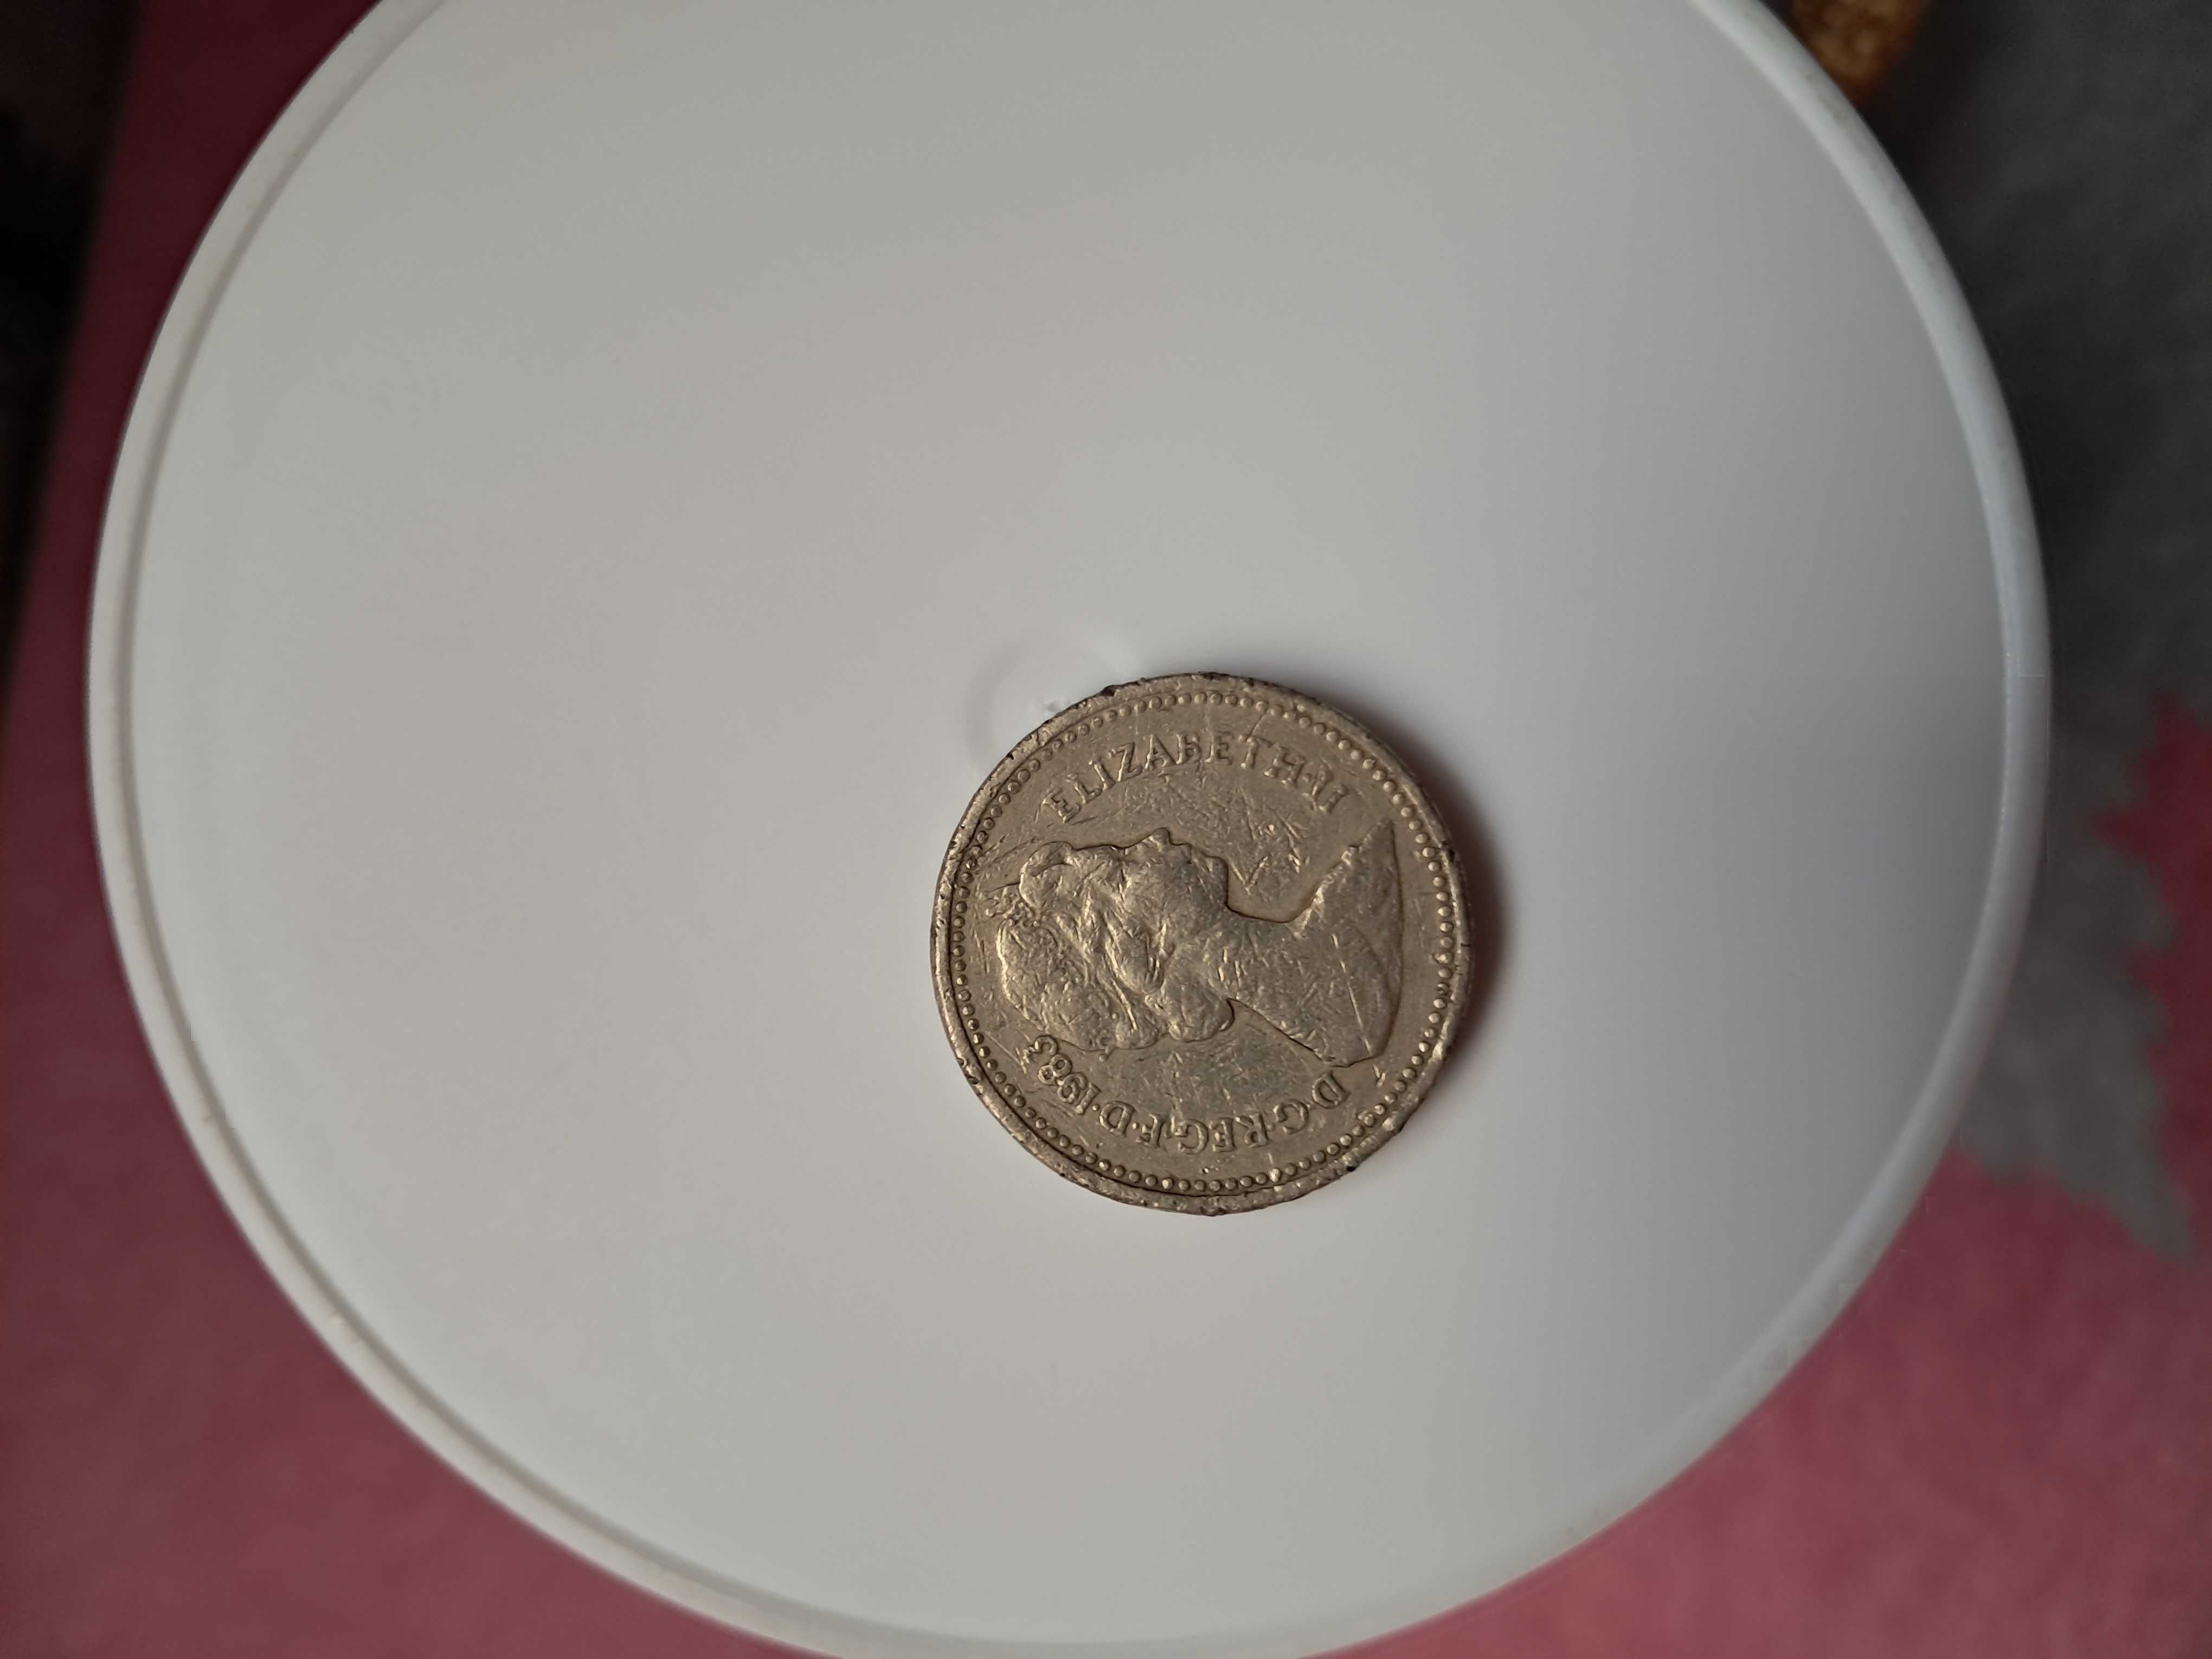 Vand moneda One pound 1983